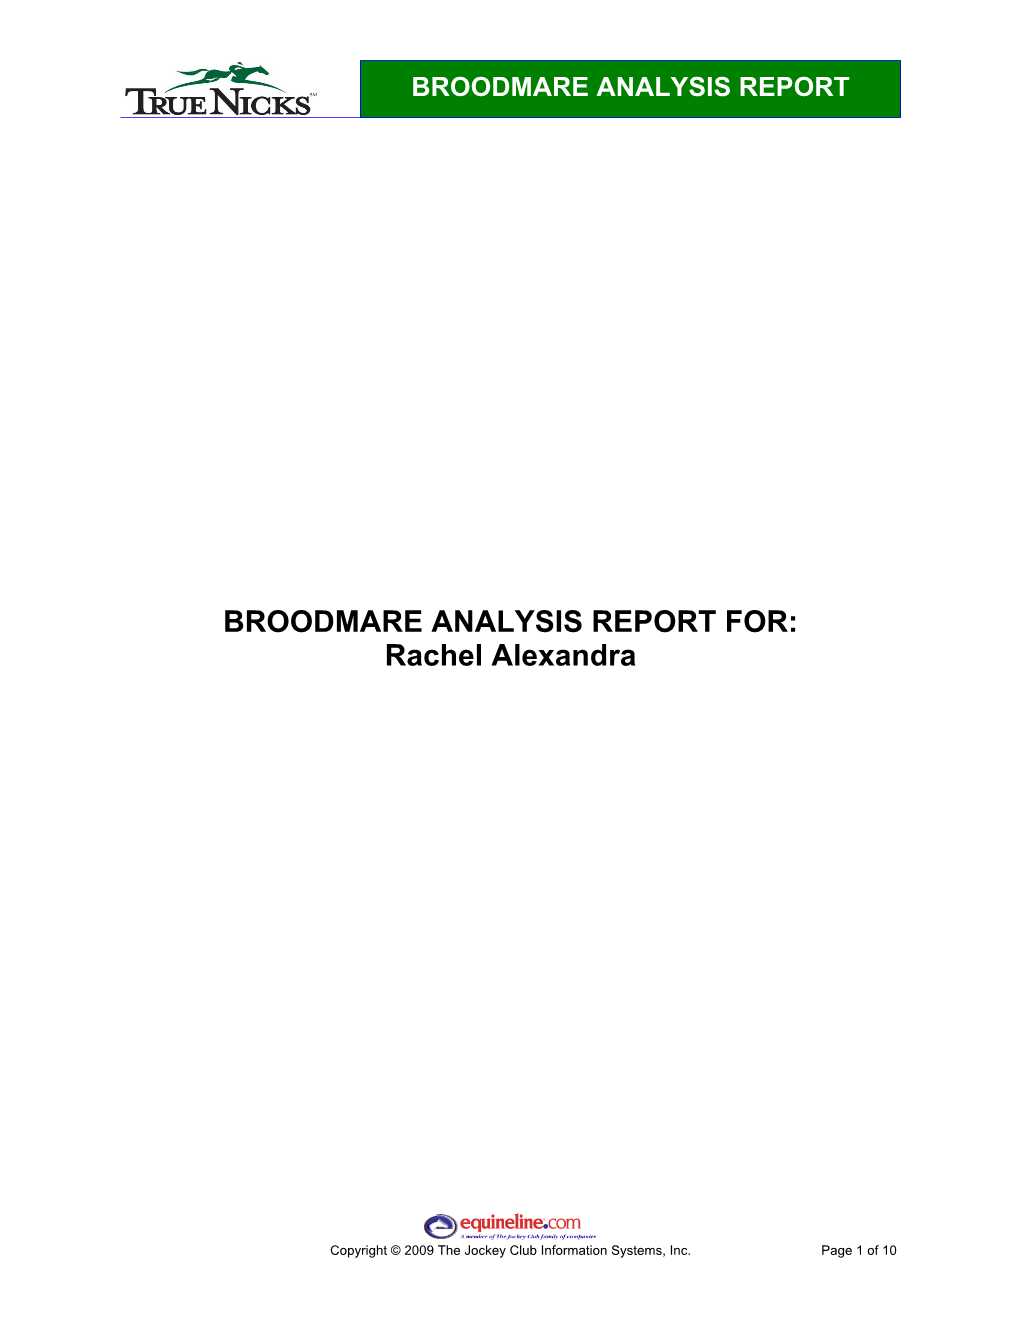 BROODMARE ANALYSIS REPORT FOR: Rachel Alexandra